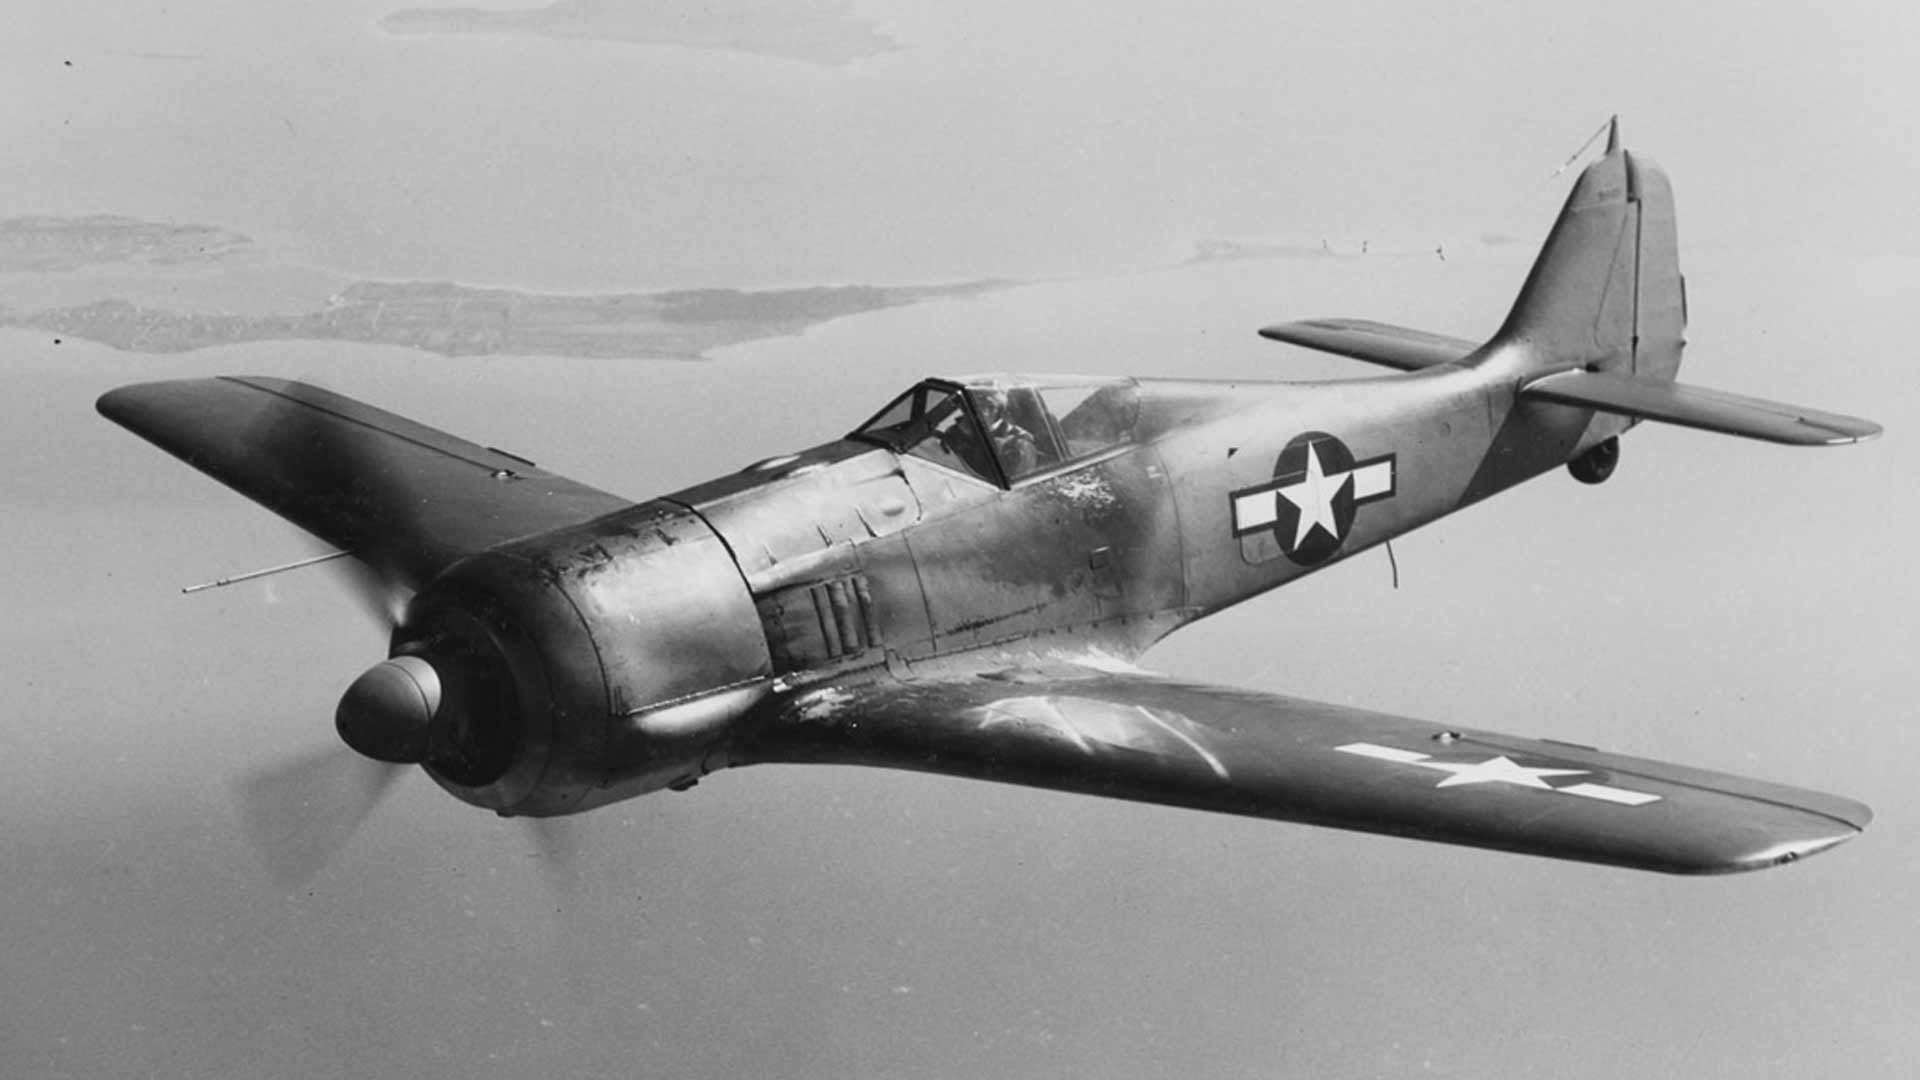 The Focke Wulf 190